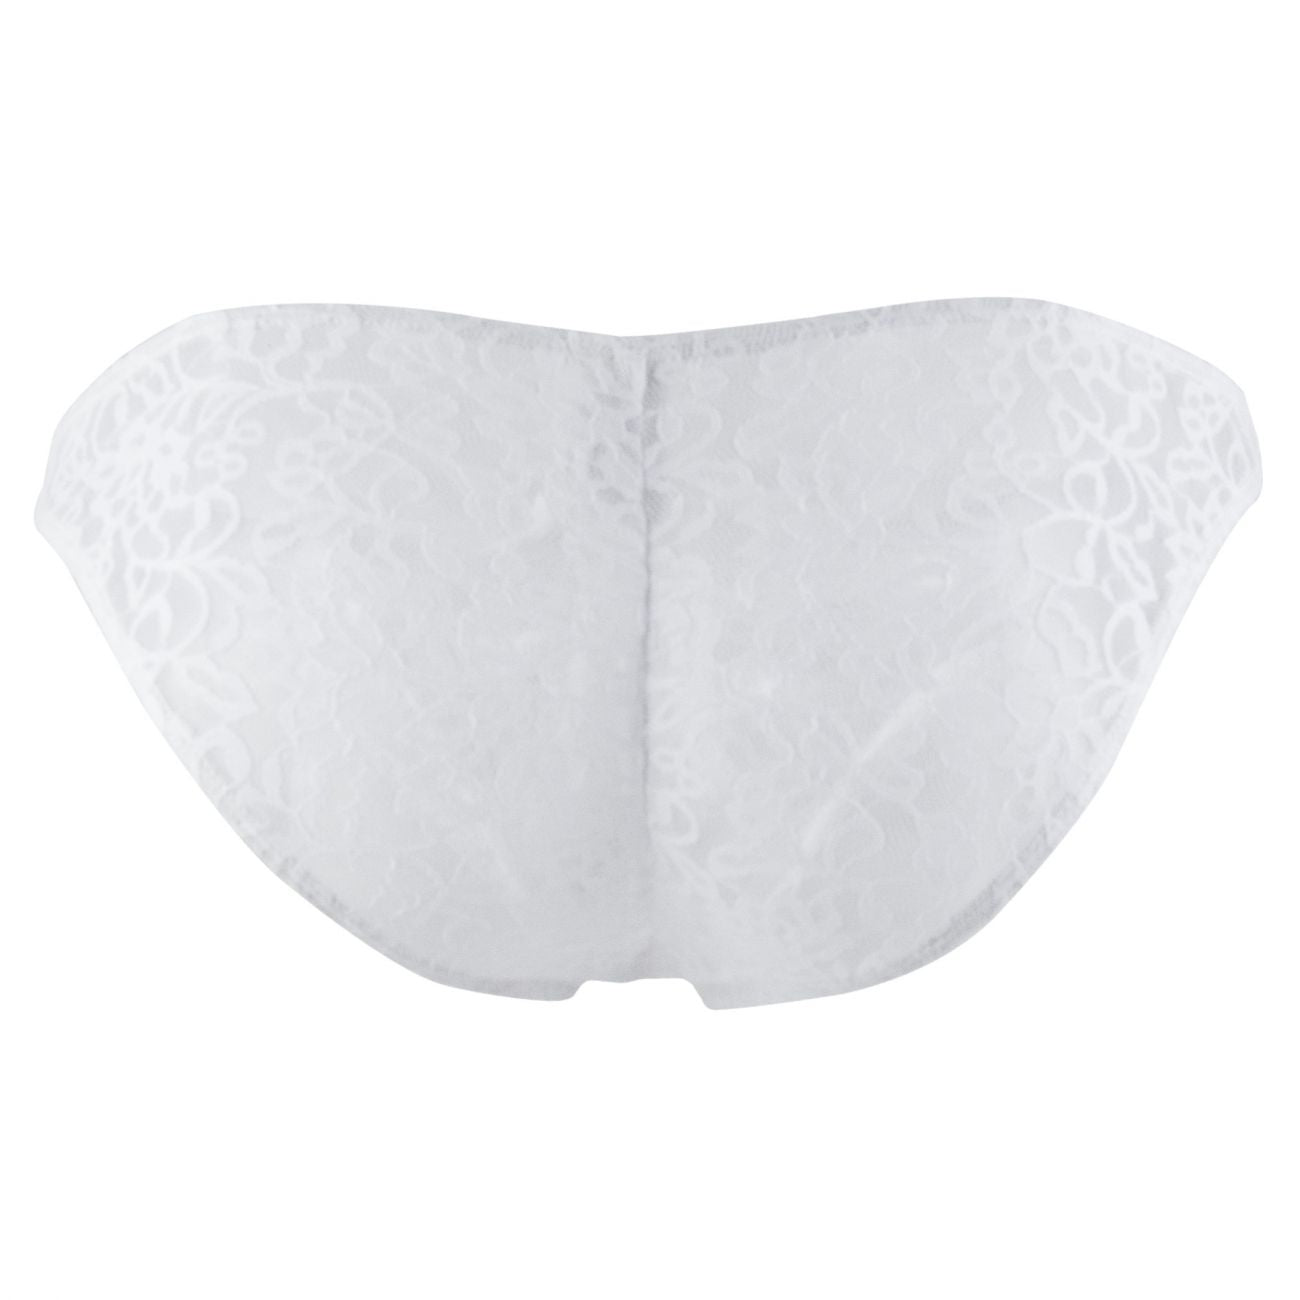 Joe Snyder JSMBUL01 Maxibulge Bikini White Lace